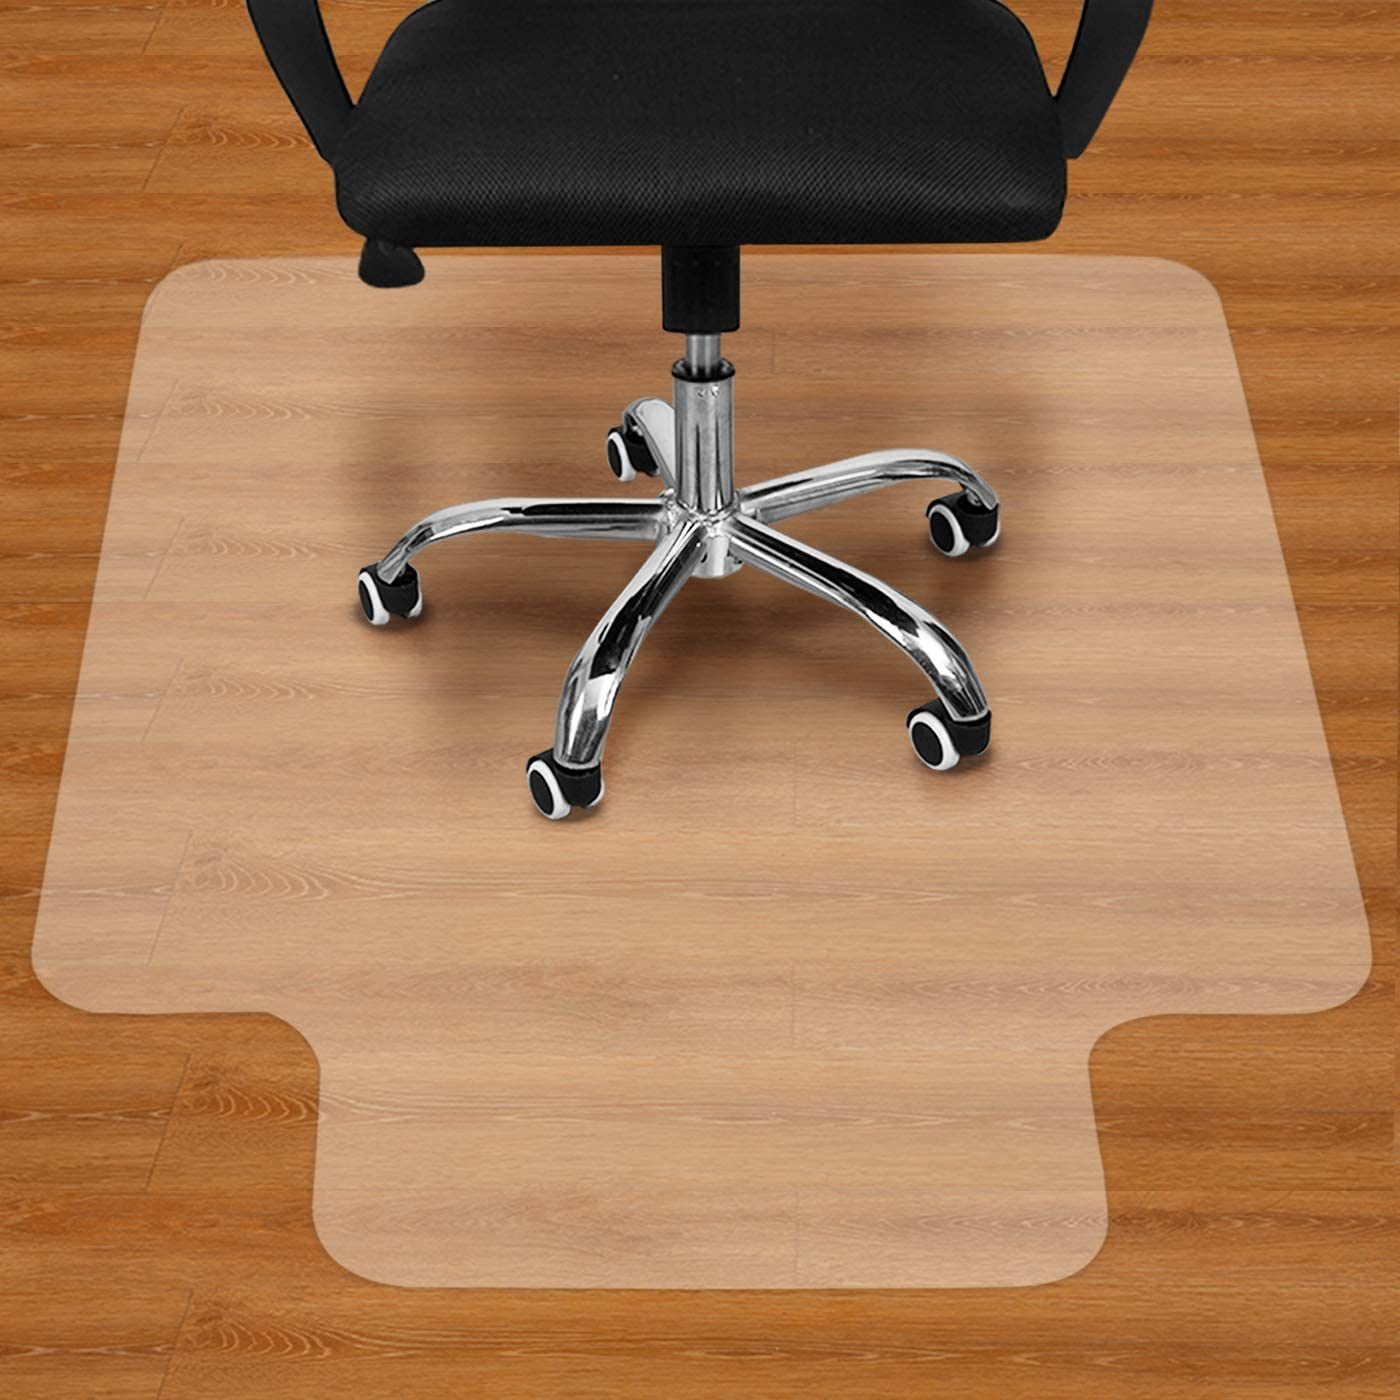 PVC Protection Mat For Hard Floor Carpet Home Office Desk Chair Transparent Pad 